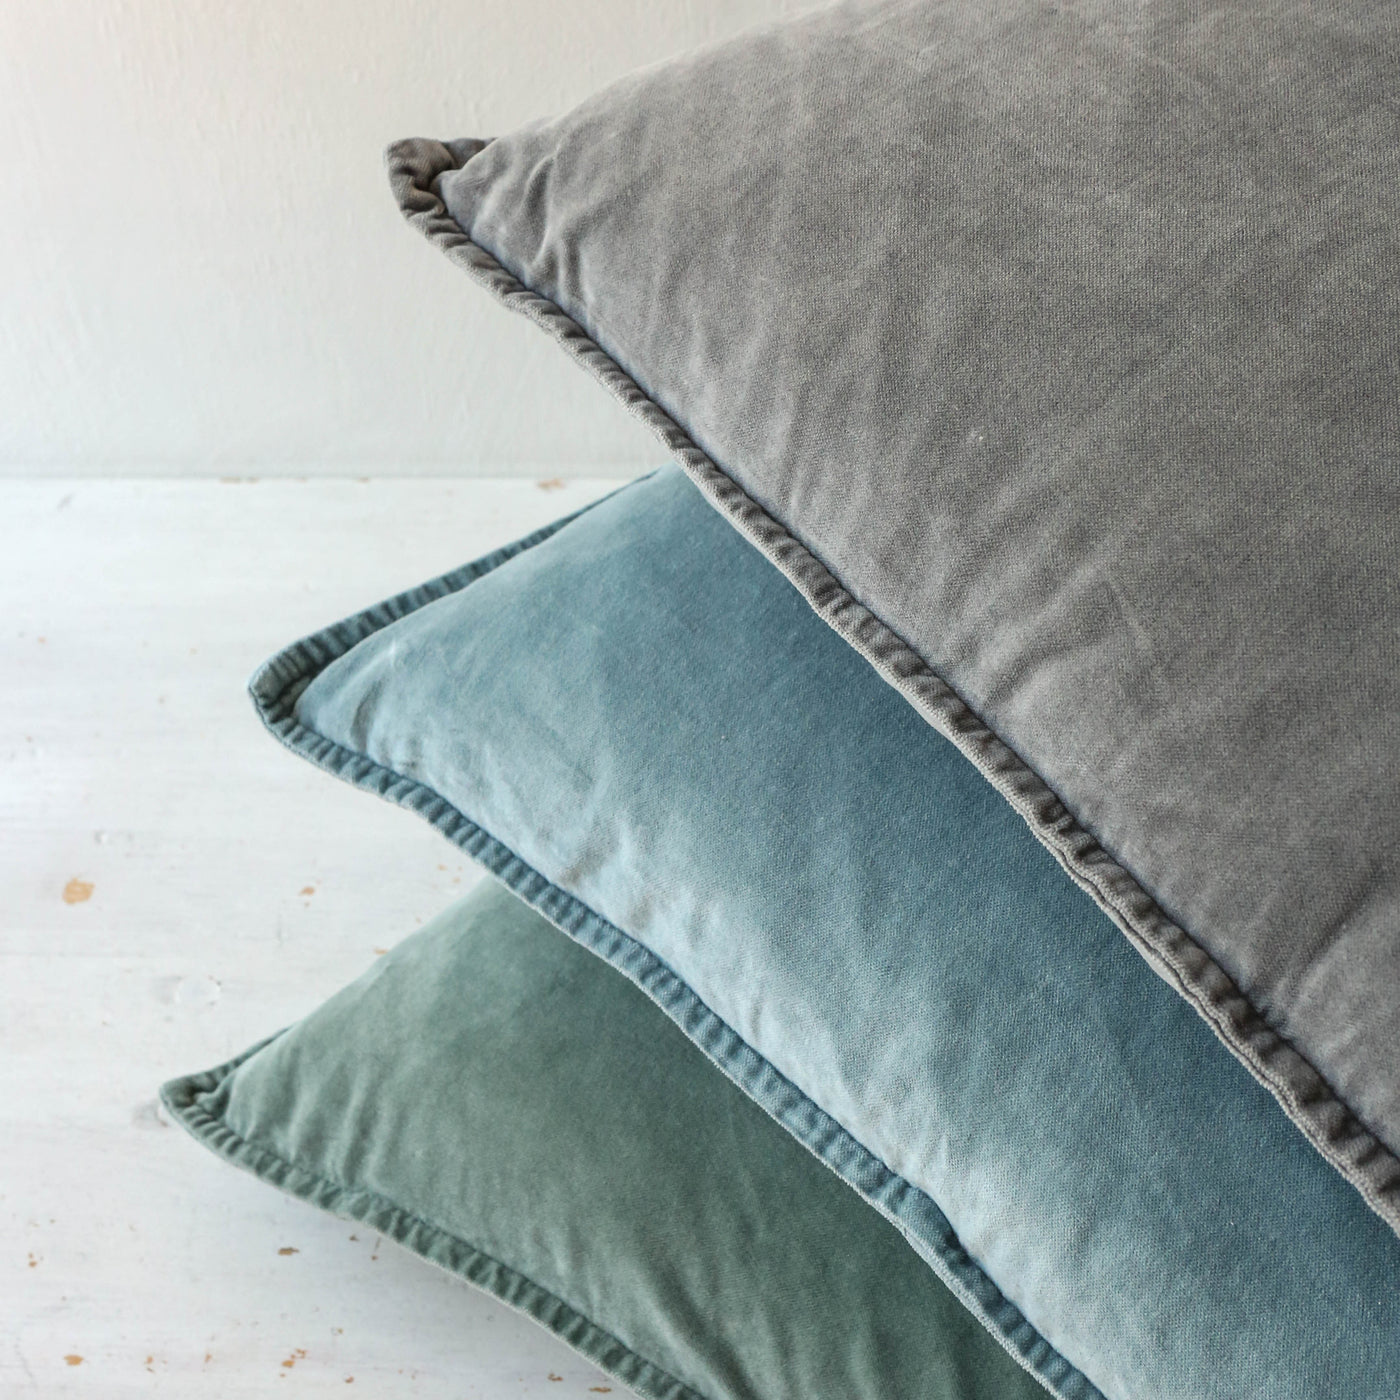 Cotton Velvet Cushion Cover - Dusty Blue